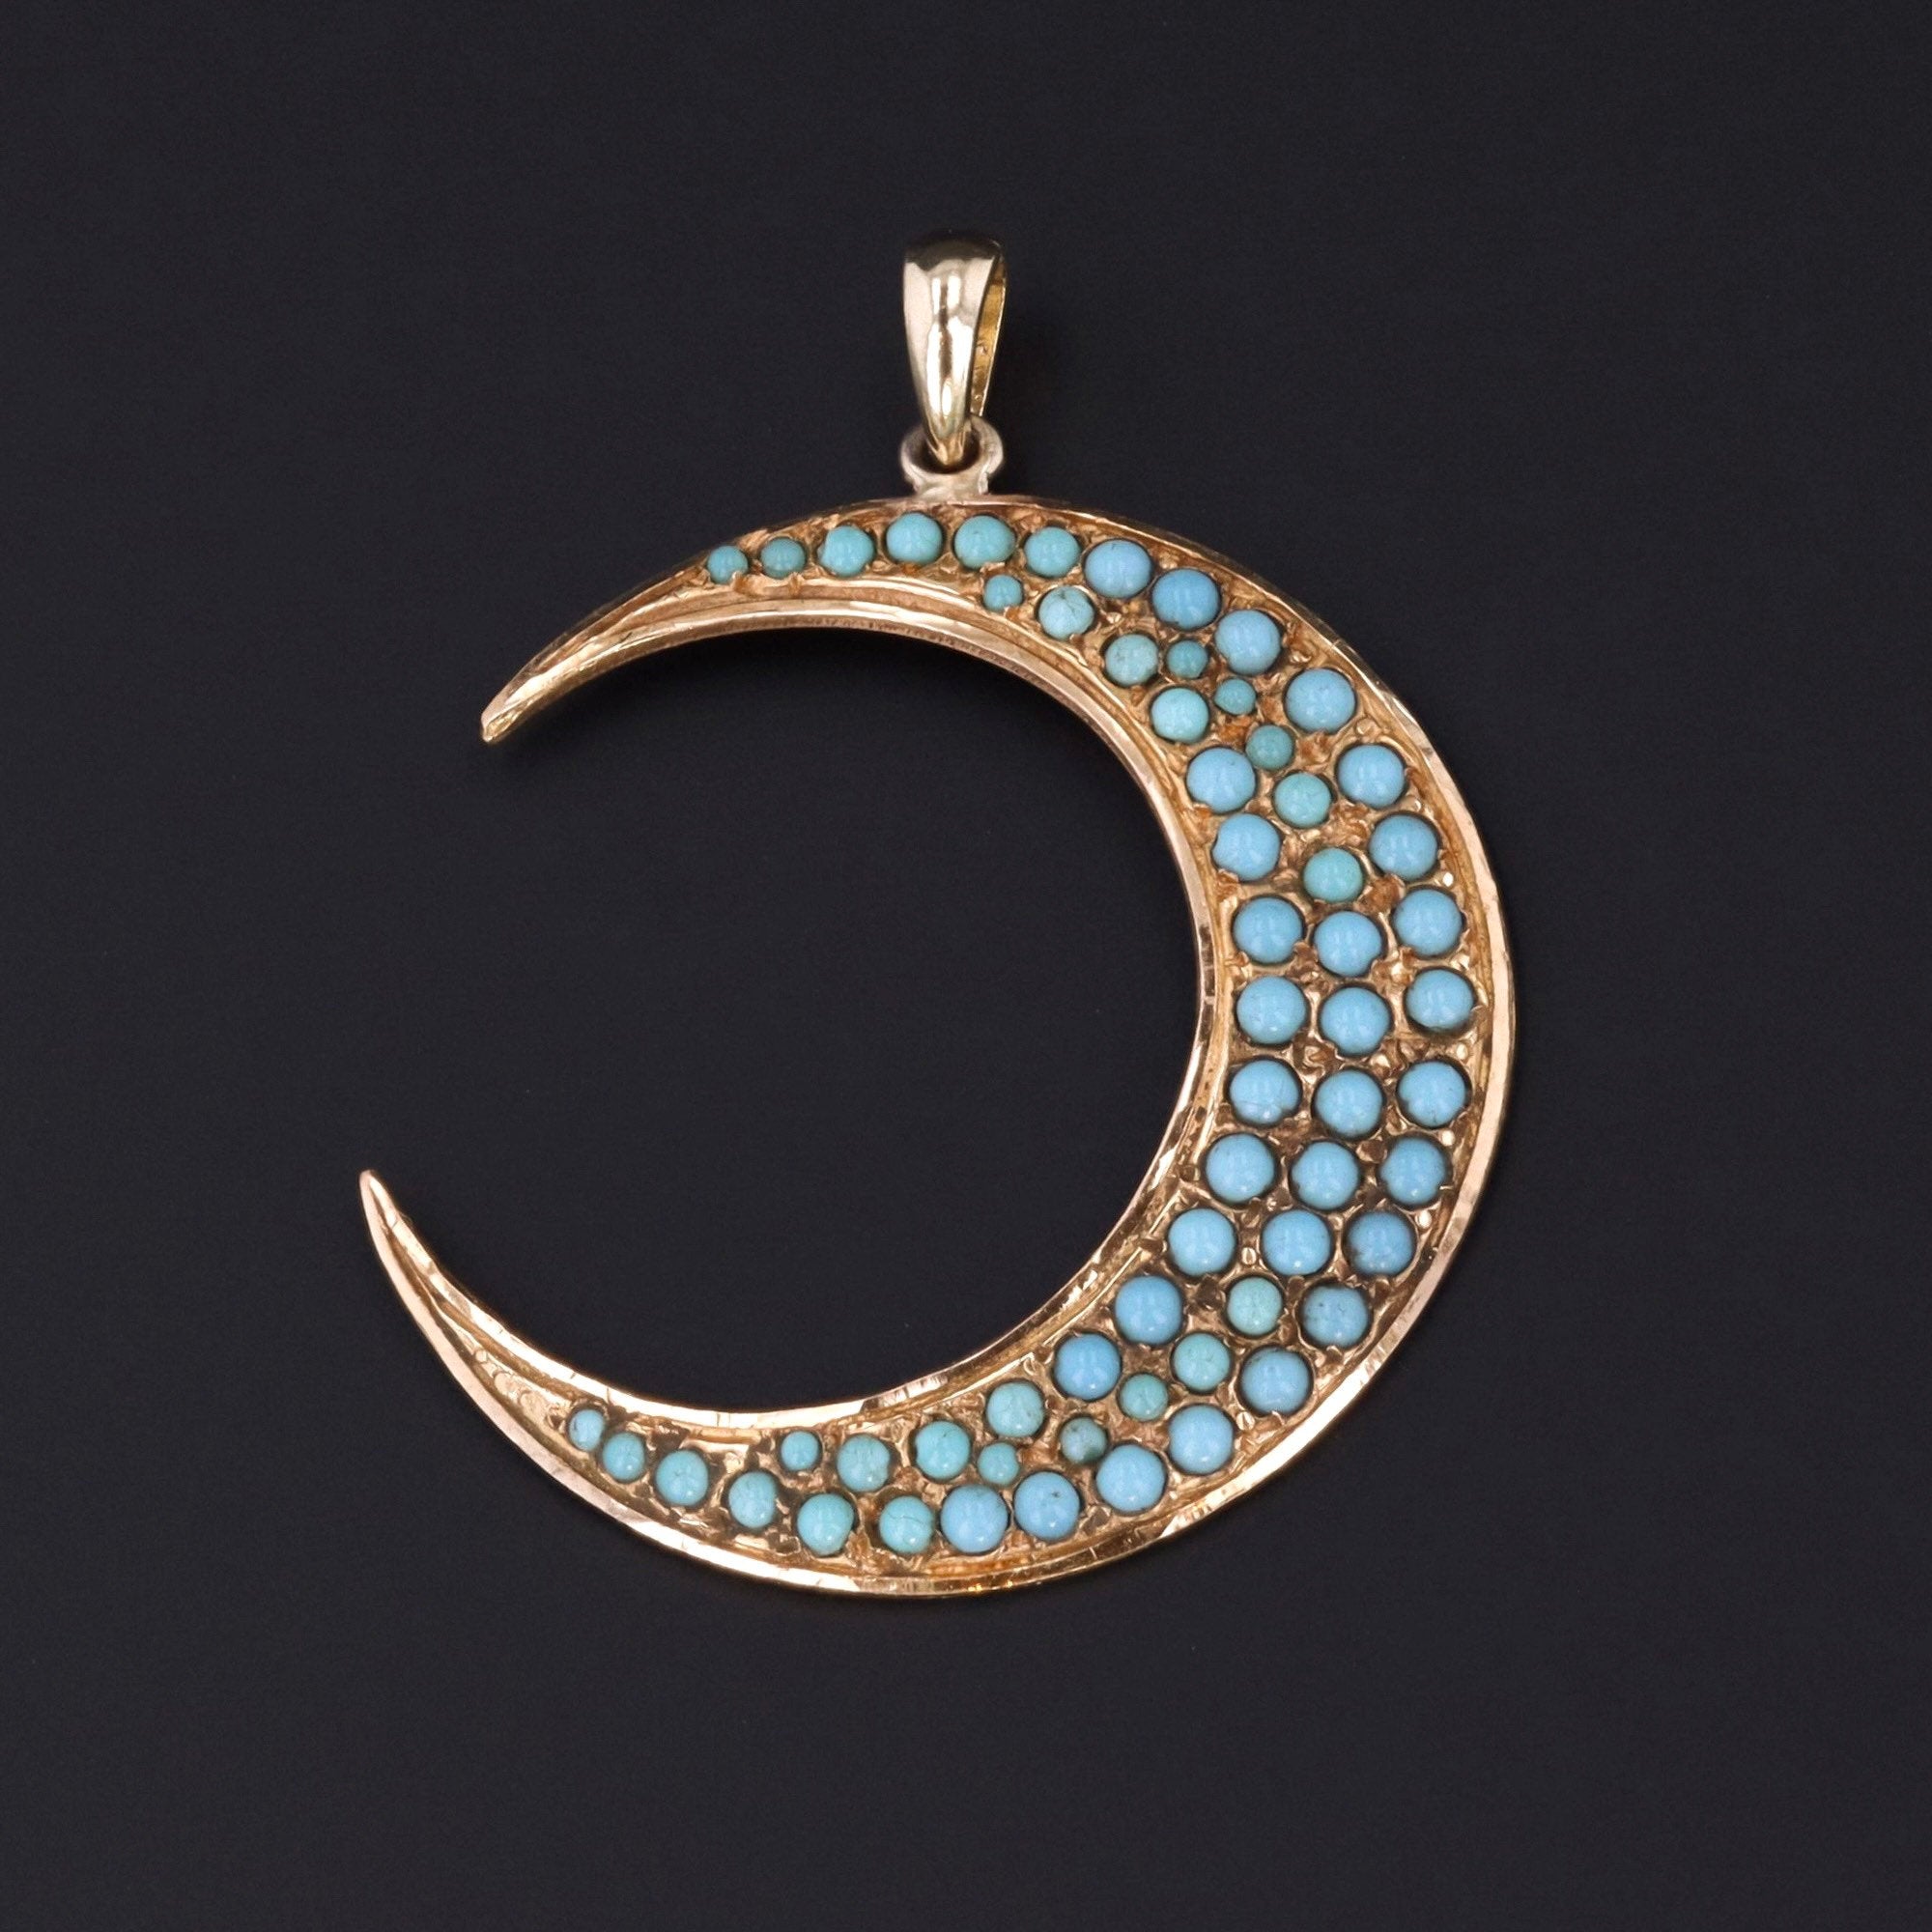 Crescent Moon Pendant | Turquoise Glass Crescent Moon Pendant | Antique Pin Conversion | 14K Gold Pendant | Crescent Moon